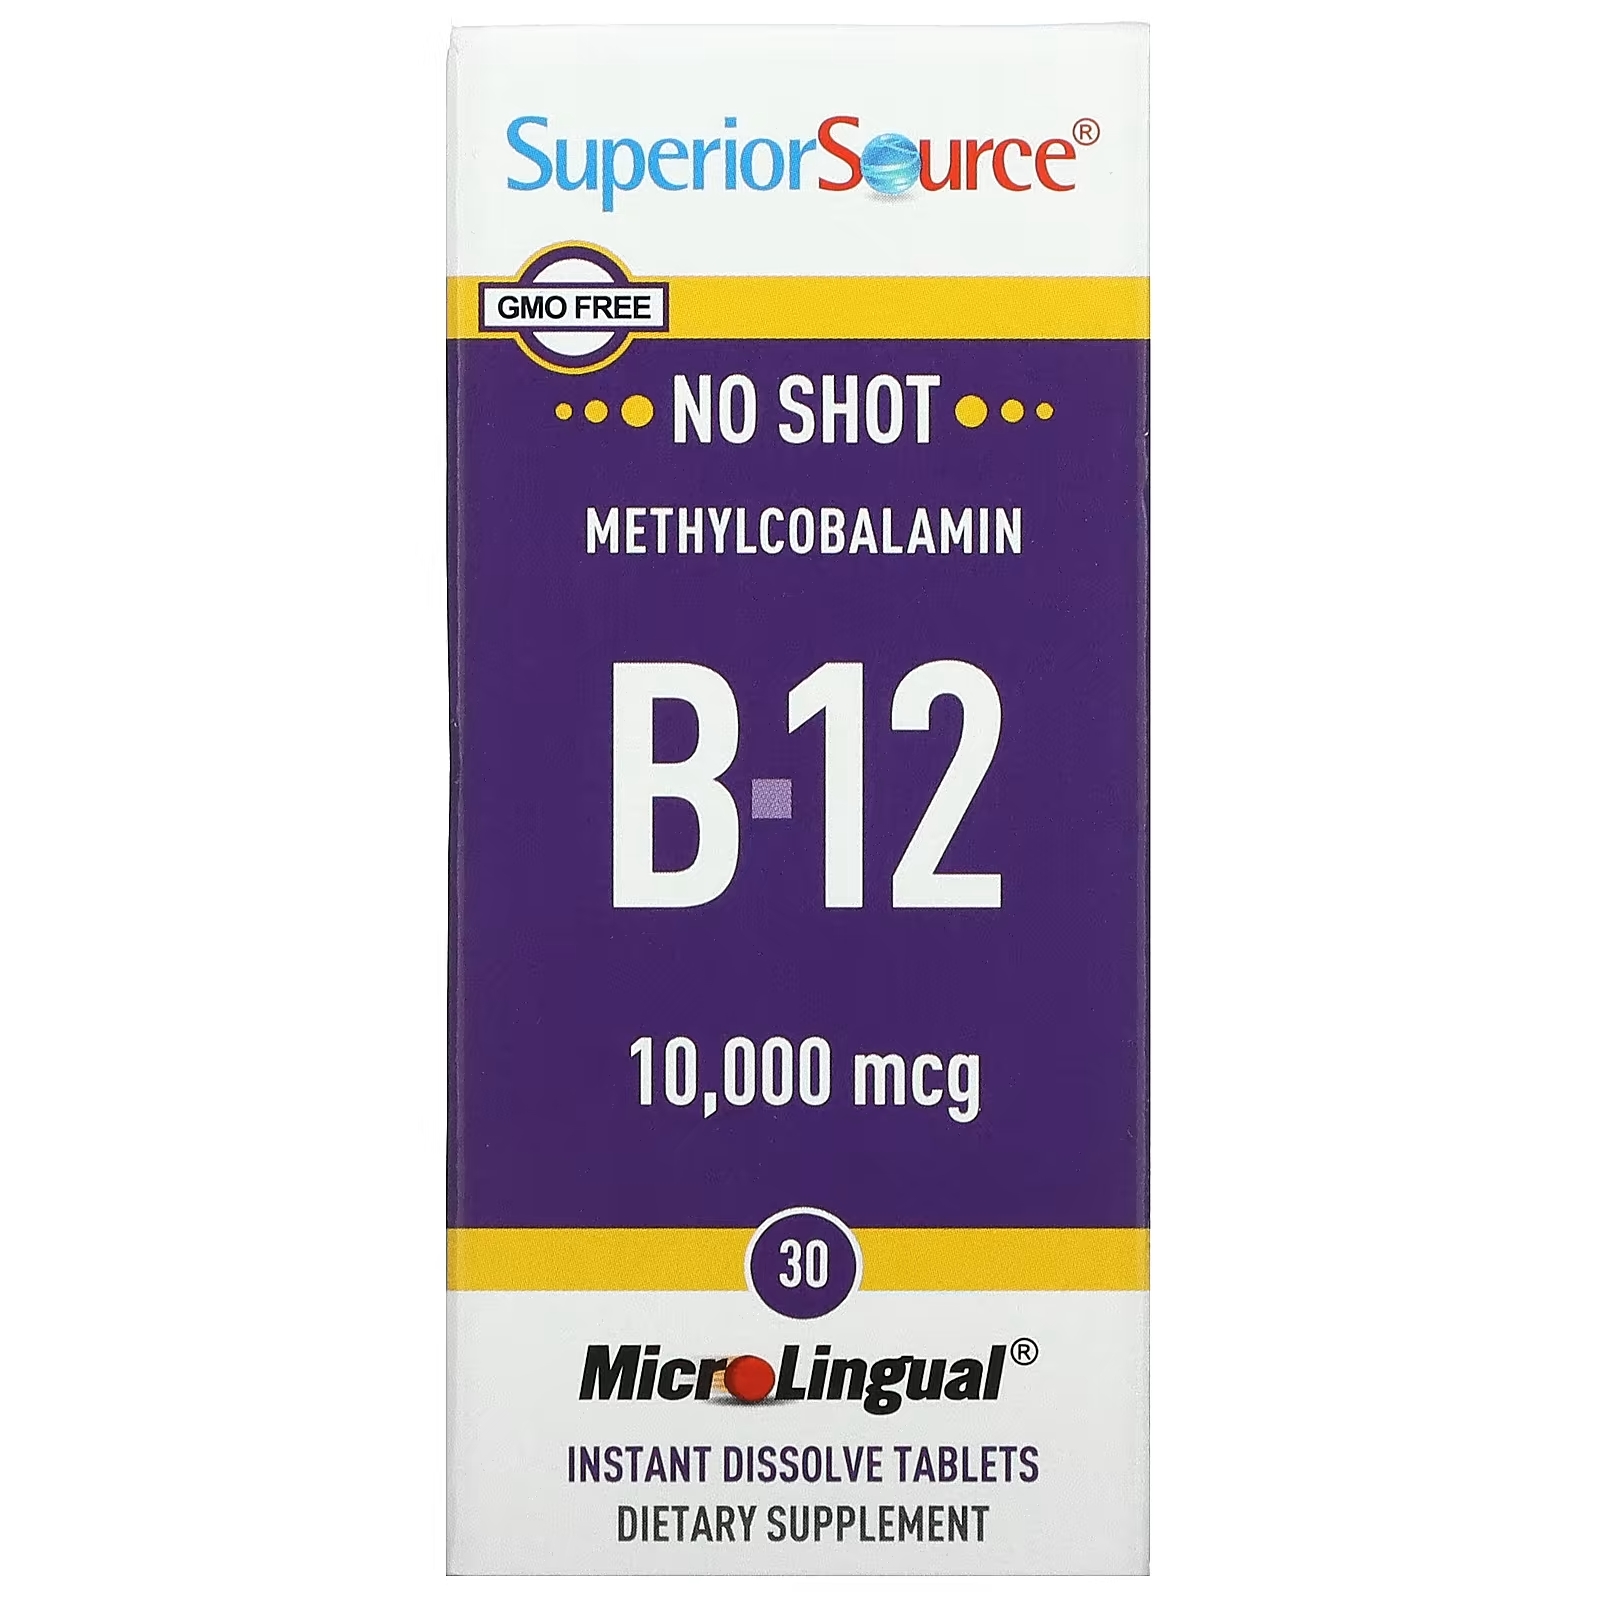 Superior Source метилкобаламин B12 10 000 мкг, 30 таблеток superior source метилкобаламин b12 10 000 мкг 30 быстрорастворимых таблеток microlingual